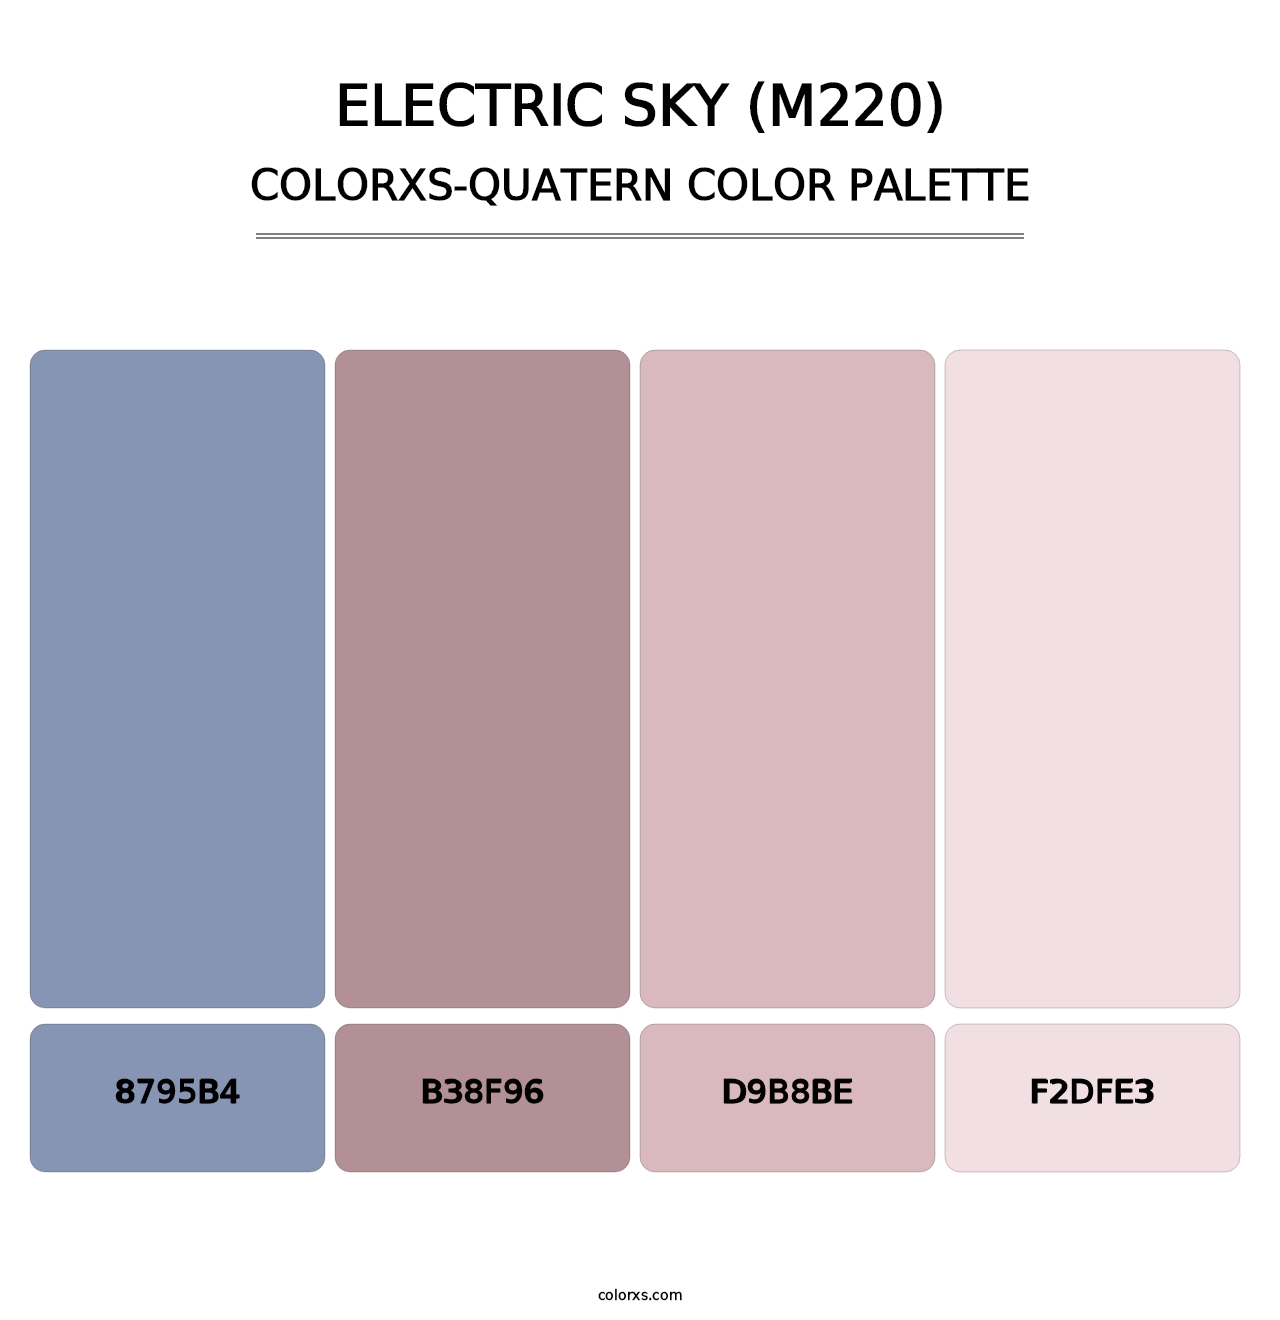 Electric Sky (M220) - Colorxs Quatern Palette